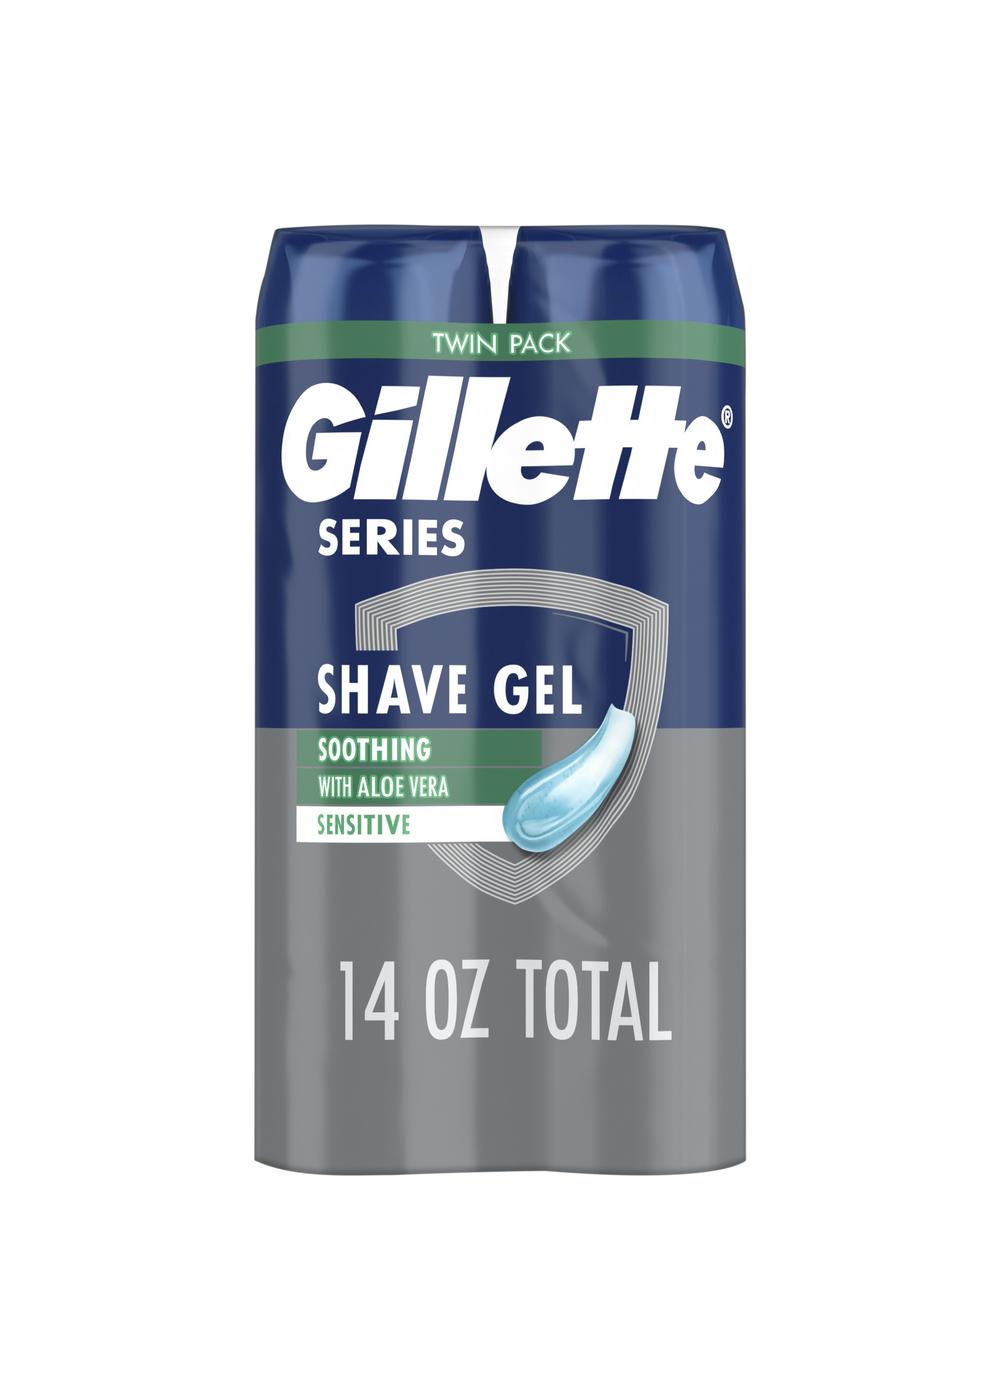 Gillette Series Shave Gel - Soothing; image 7 of 10